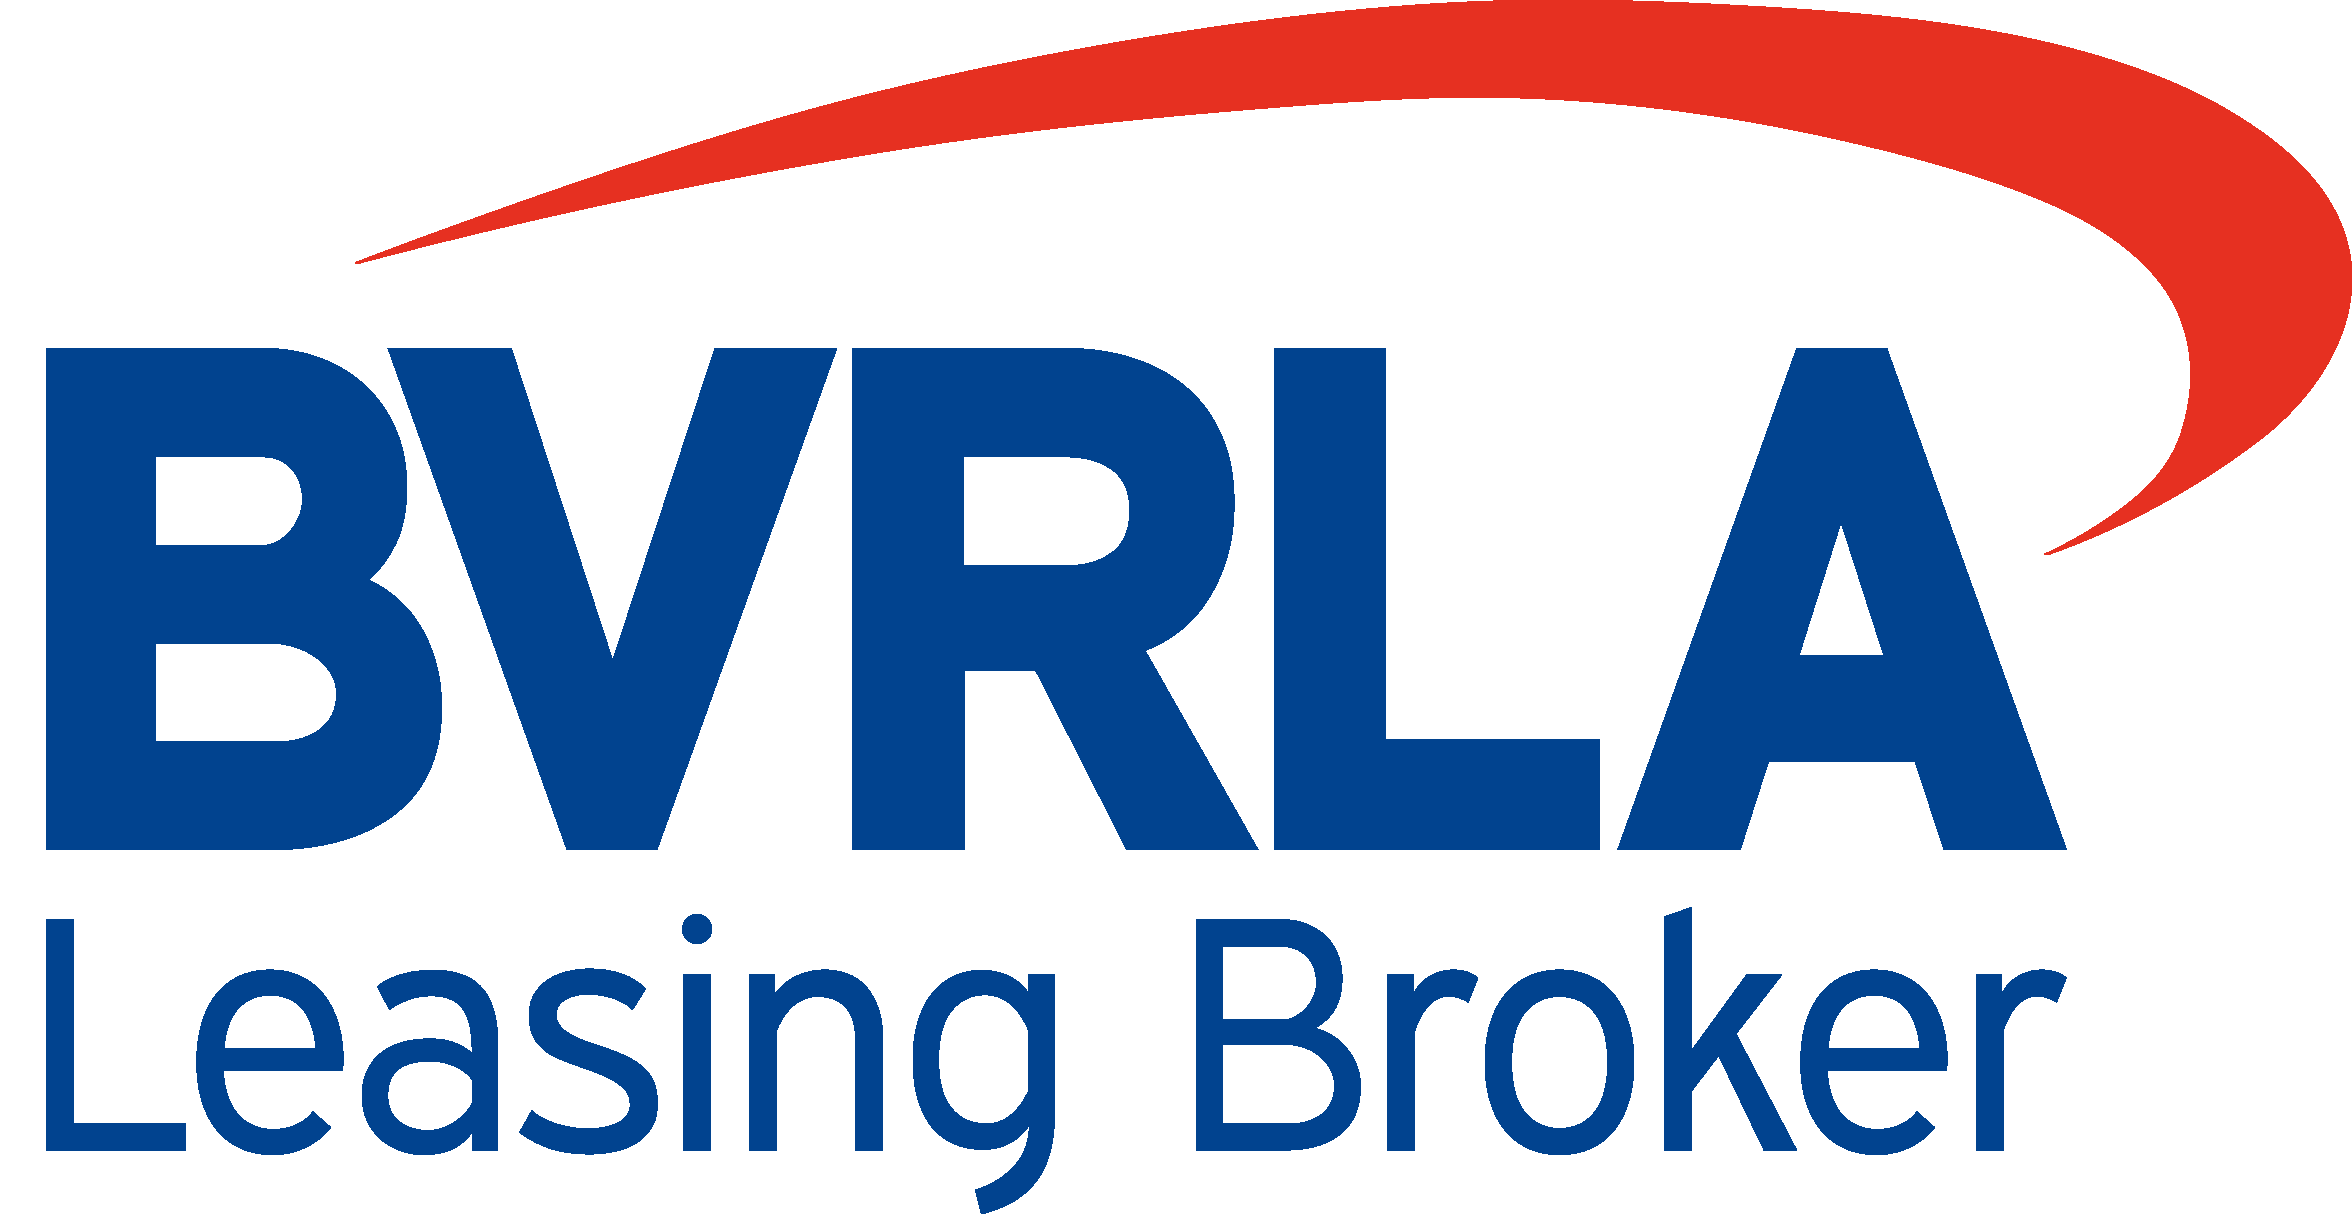 BVRLA - British Vehicle Rental and Leasing Association